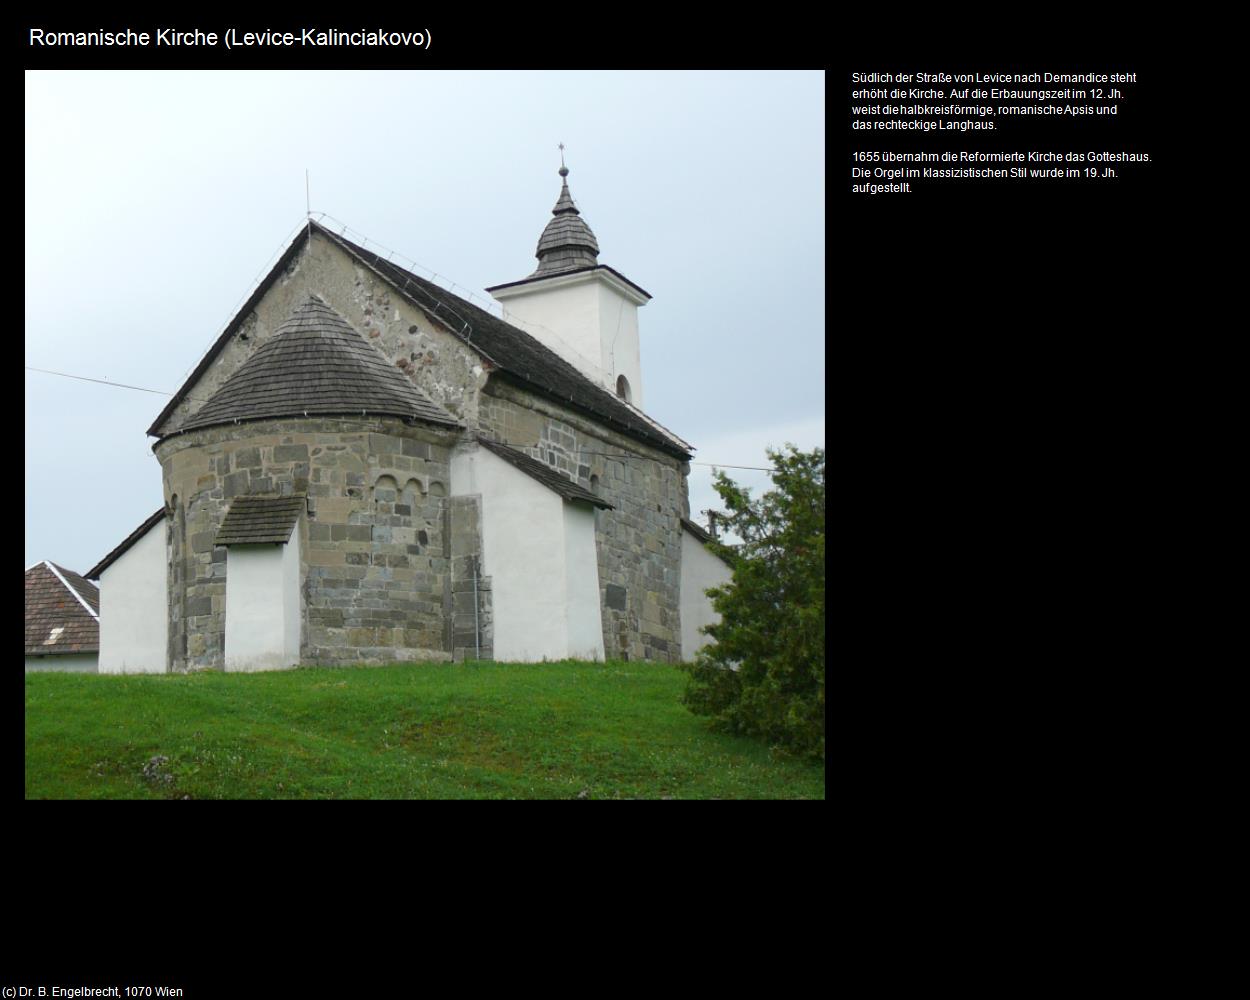 Romanische Kirche (Kalinciakovo) (Levice|Lewentz) in SLOWAKEI